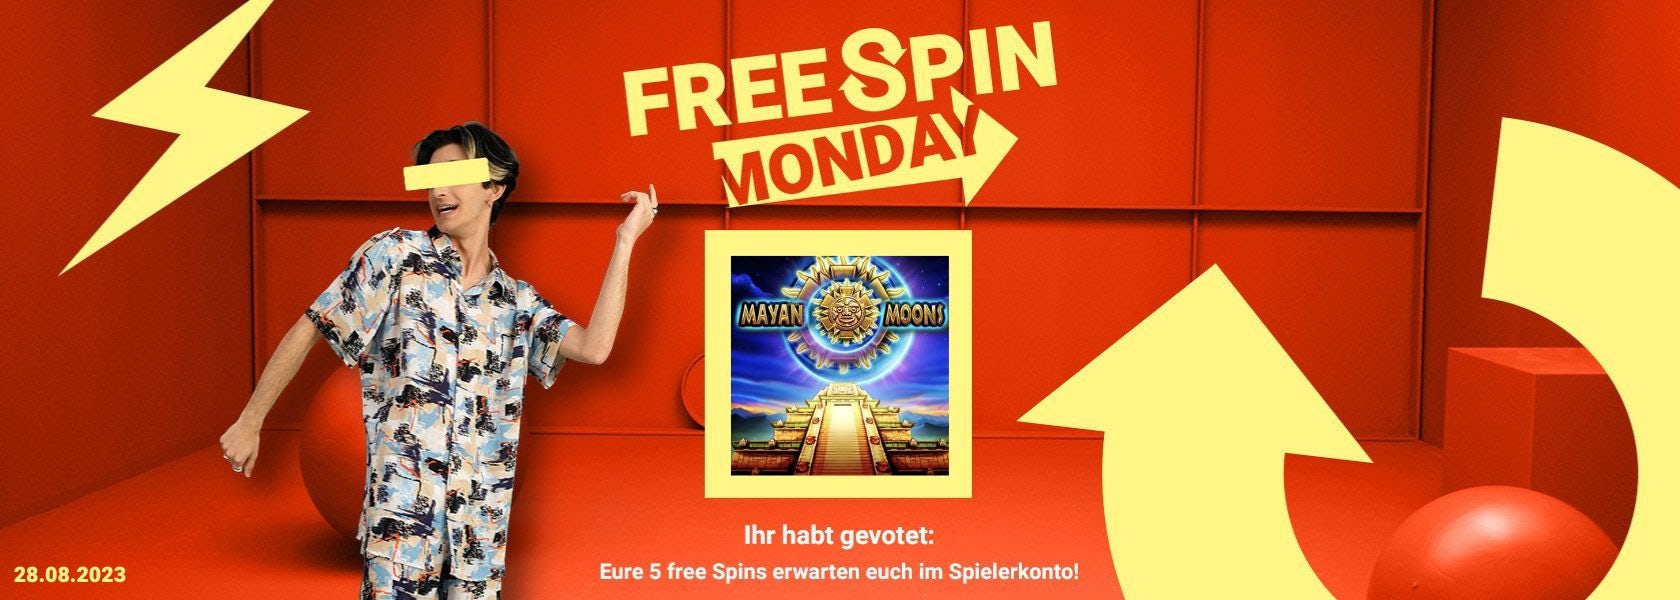 bingbong-free-spin-monday-280823